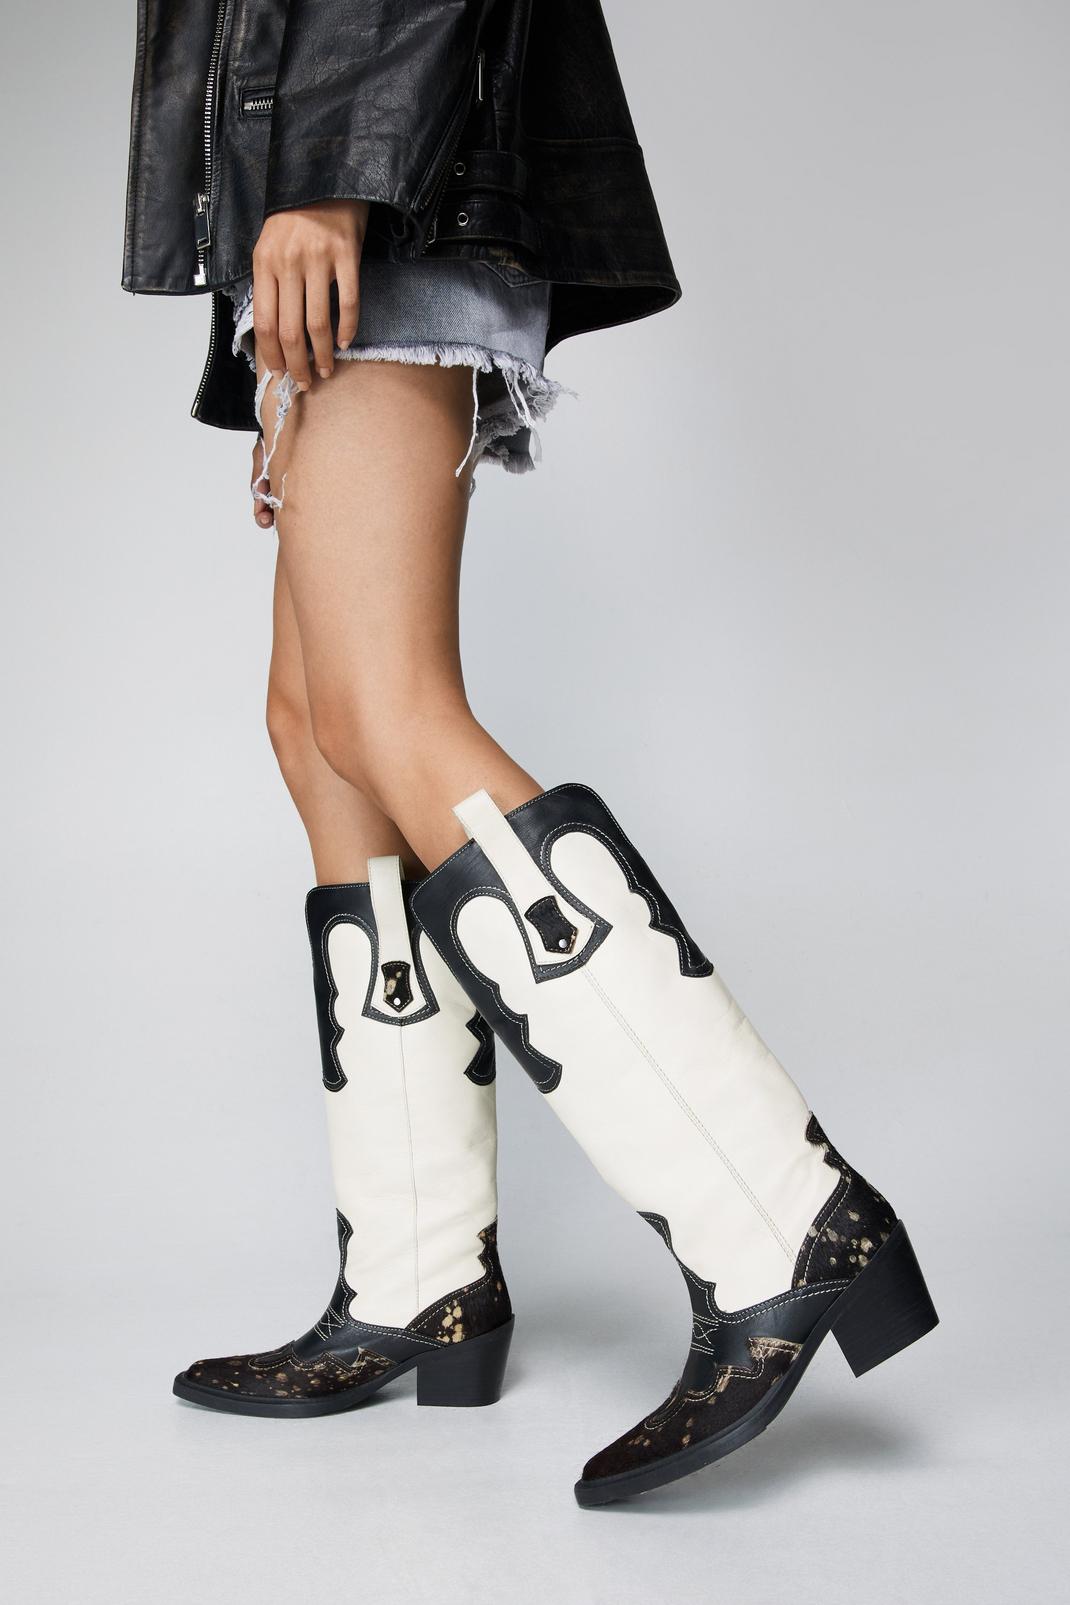 Louis Vuitton - Louis Vuitton Sock Boots on Designer Wardrobe